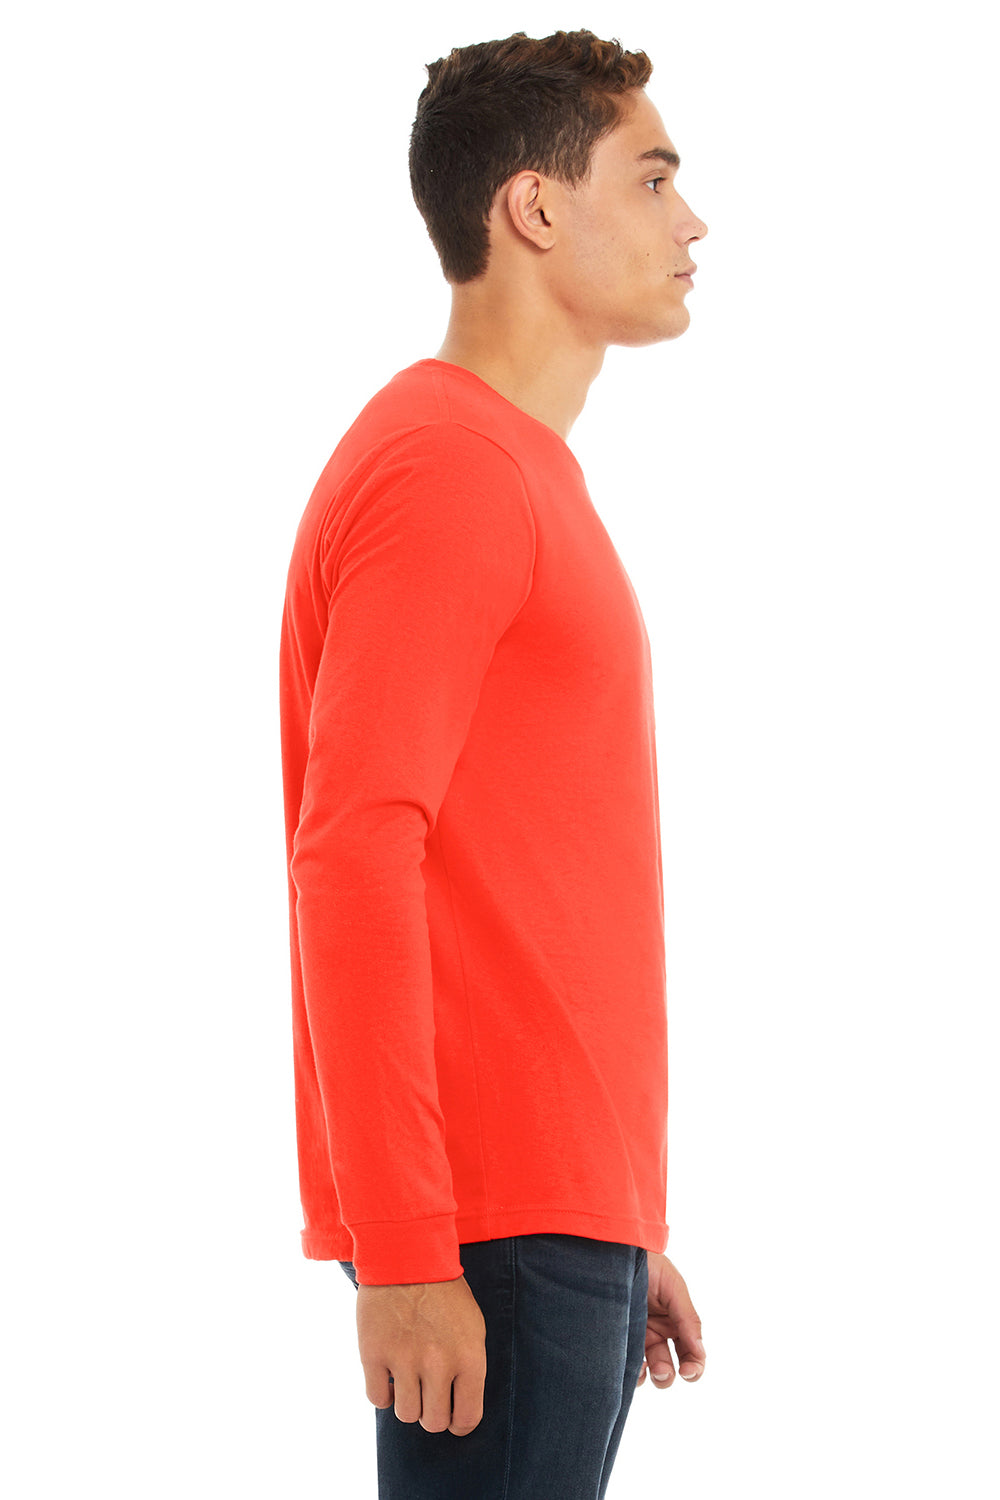 Bella + Canvas BC3501/3501 Mens Jersey Long Sleeve Crewneck T-Shirt Poppy Red Model Side